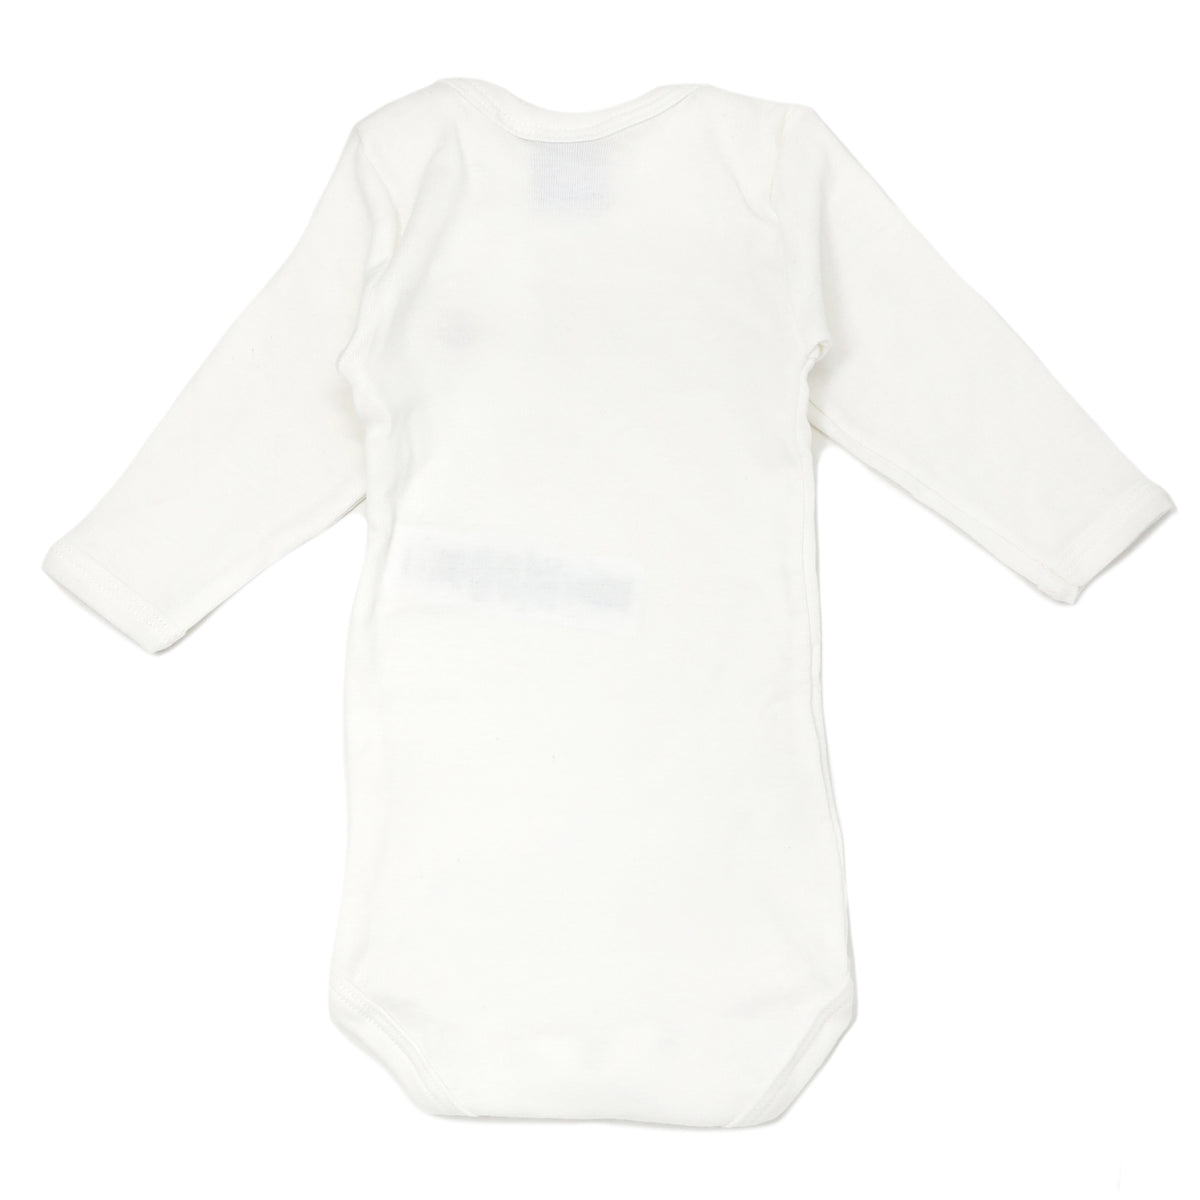 Petit Bateau Long Sleeve Bodysuit Onesie - White